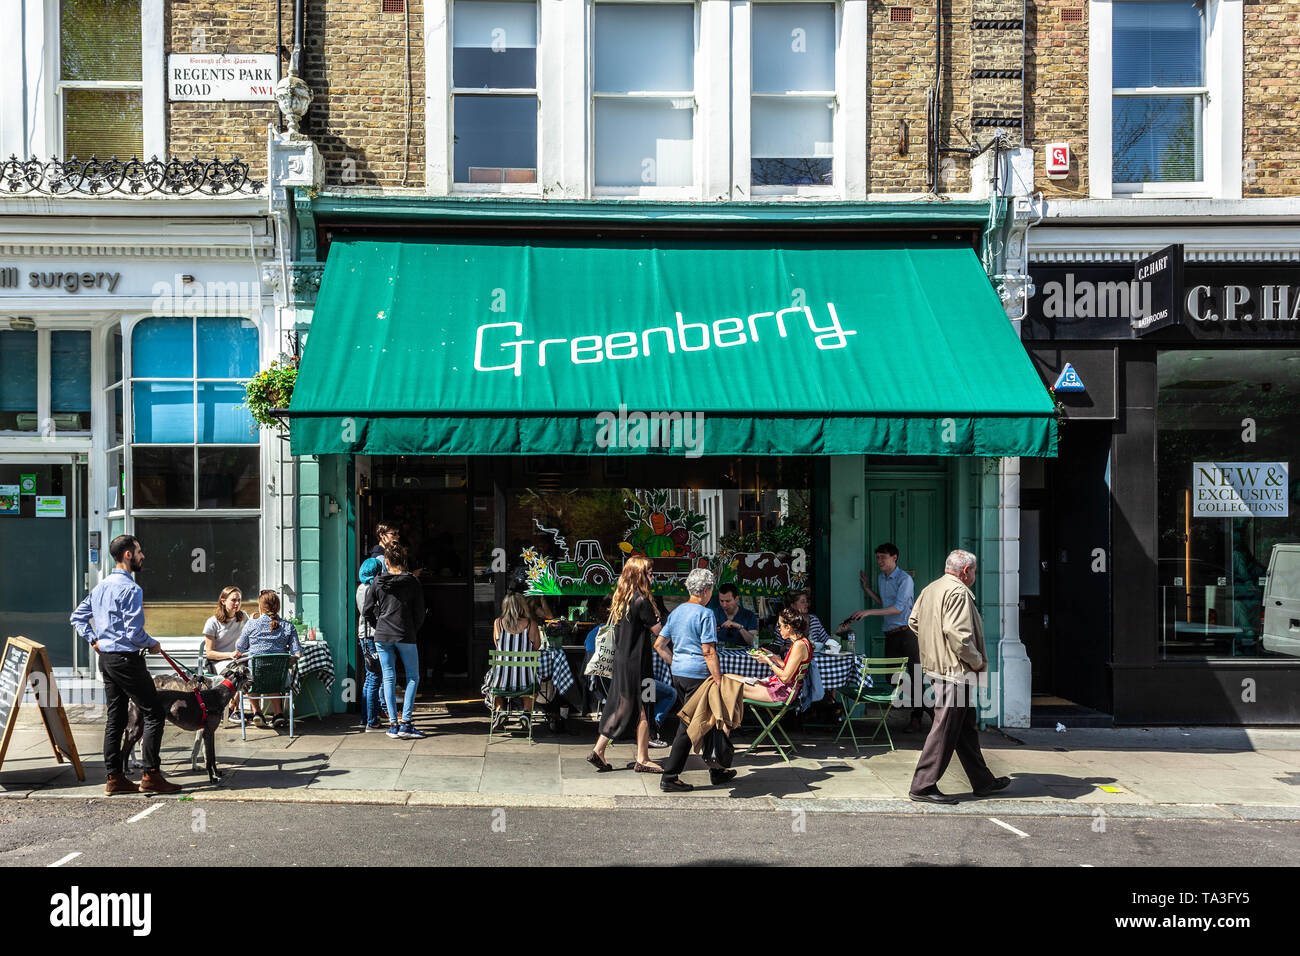 Greenberry Café, Regent's Park Rd, Primrose Hill, London, NW1 8UR, England, UK. Stockfoto